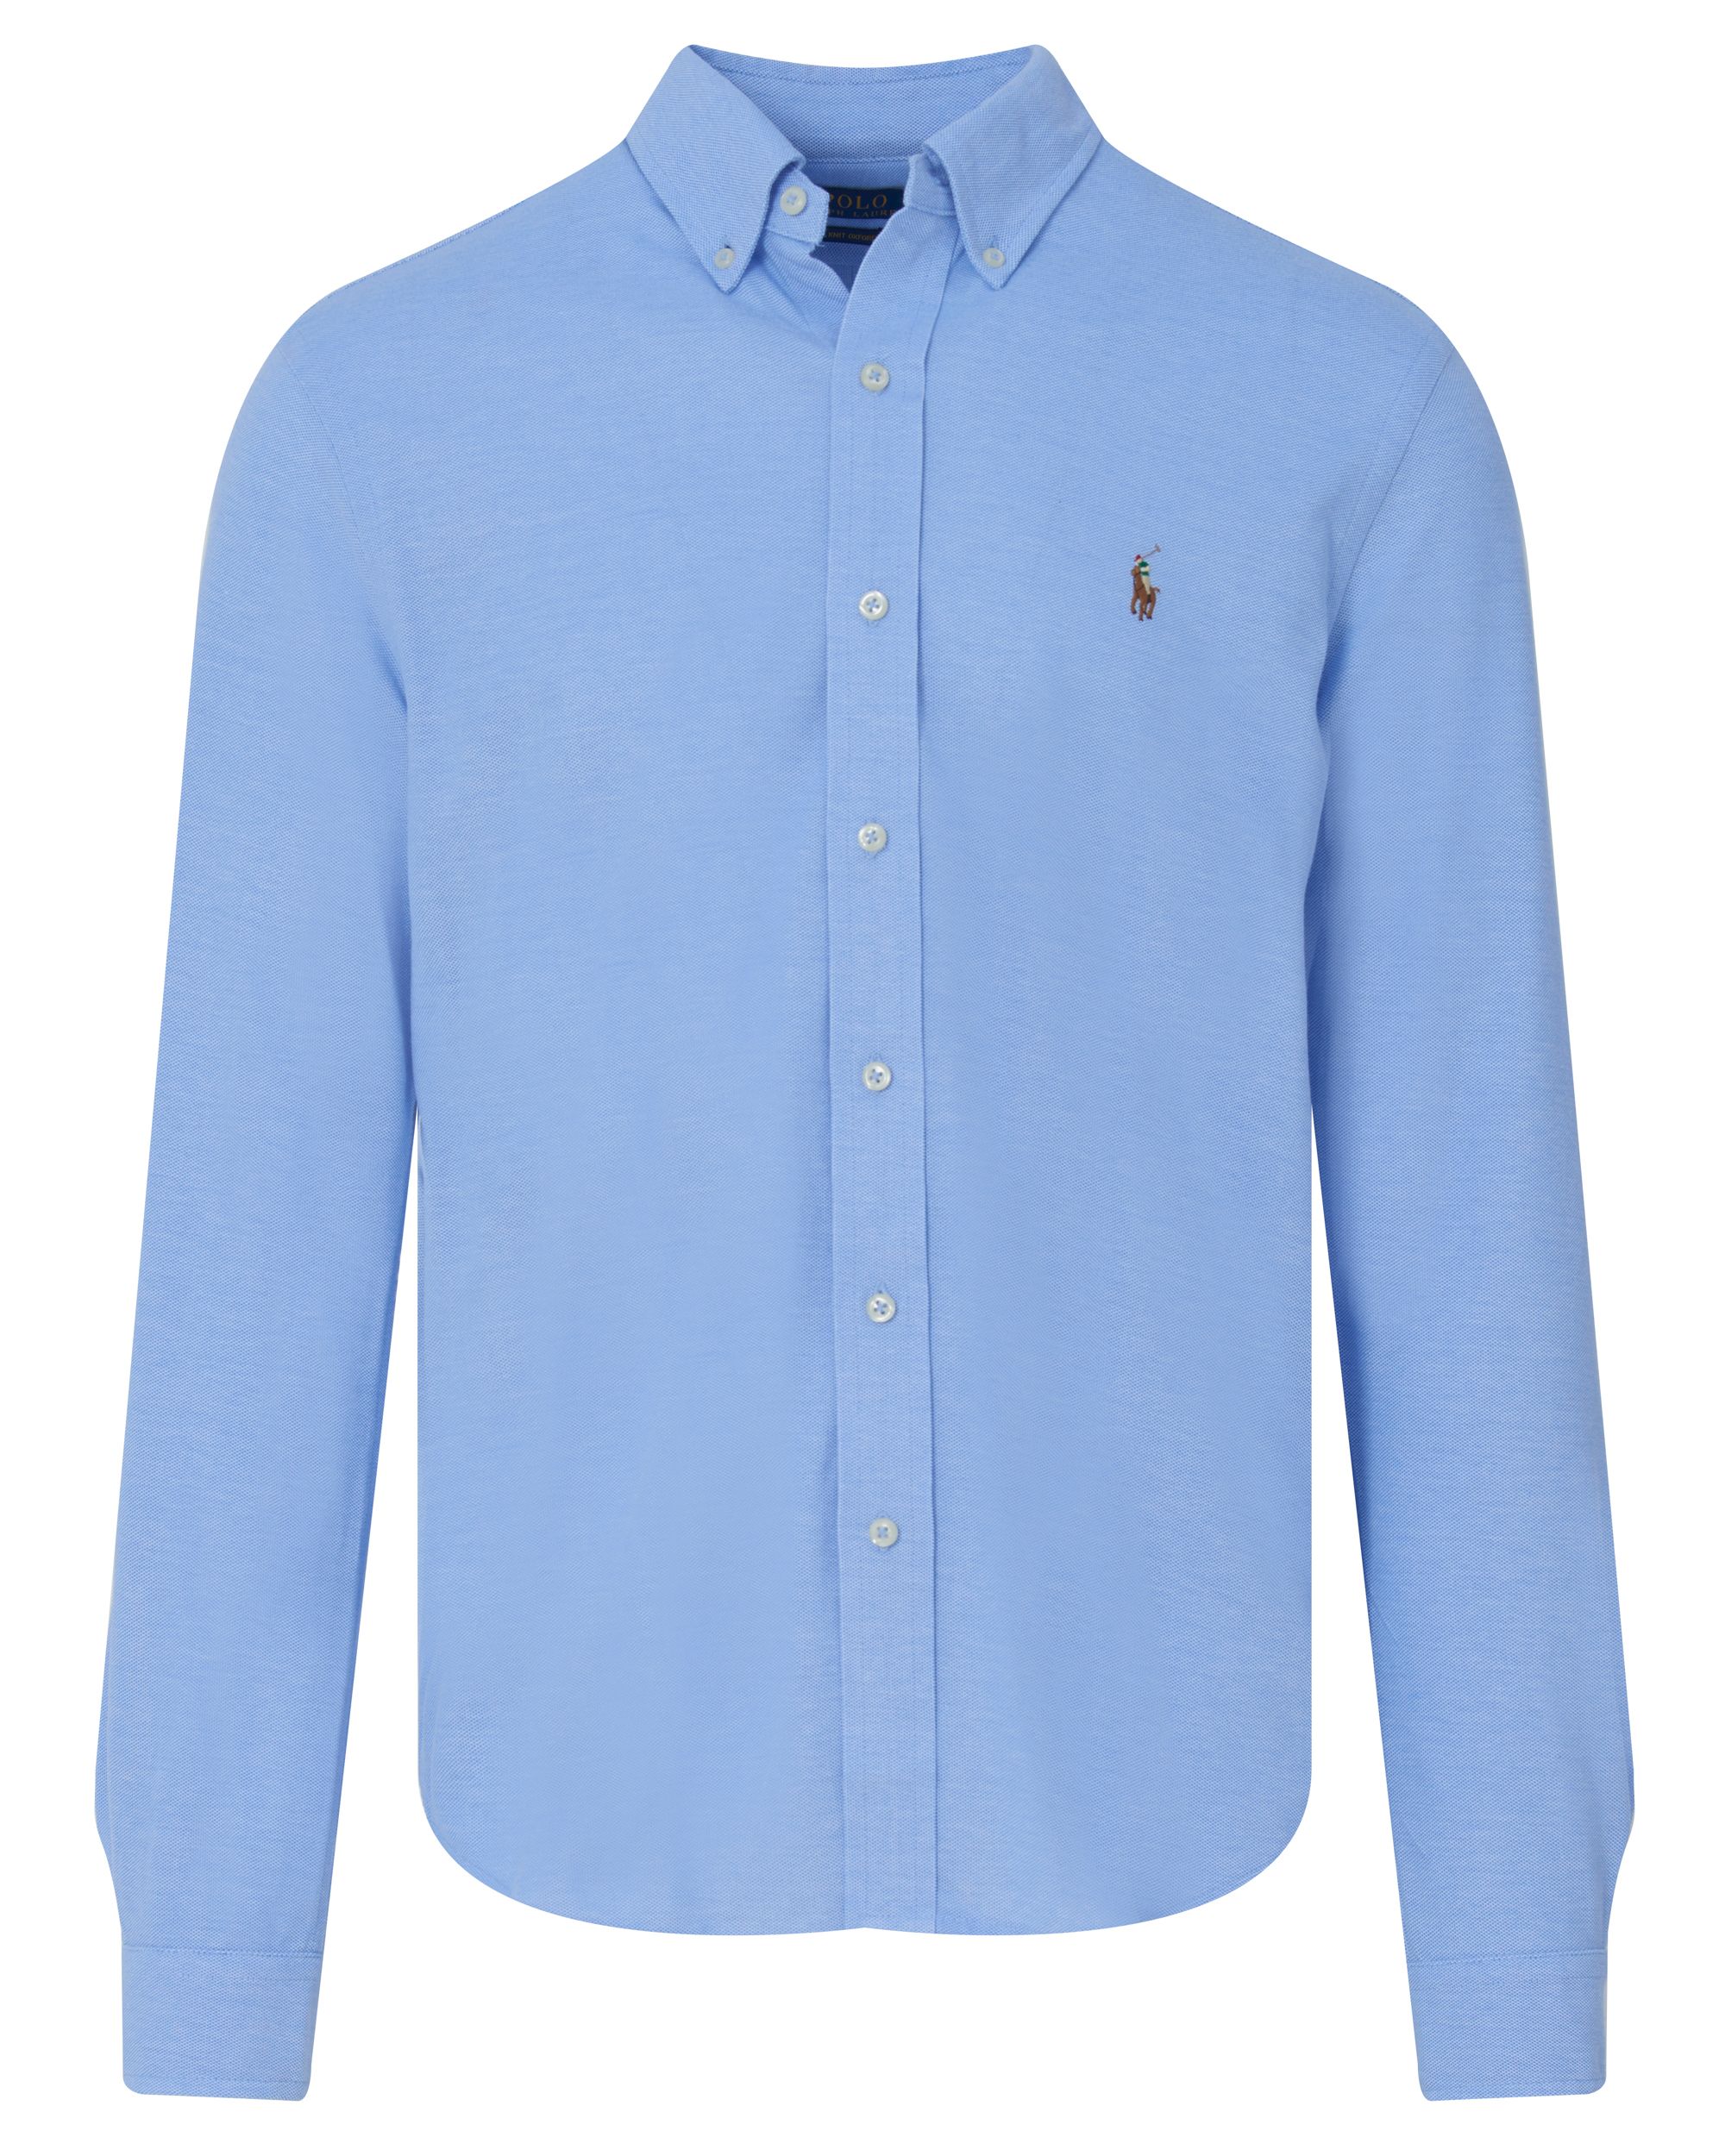 Polo Ralph Lauren Casual Overhemd LM Blauw 091537-001-L